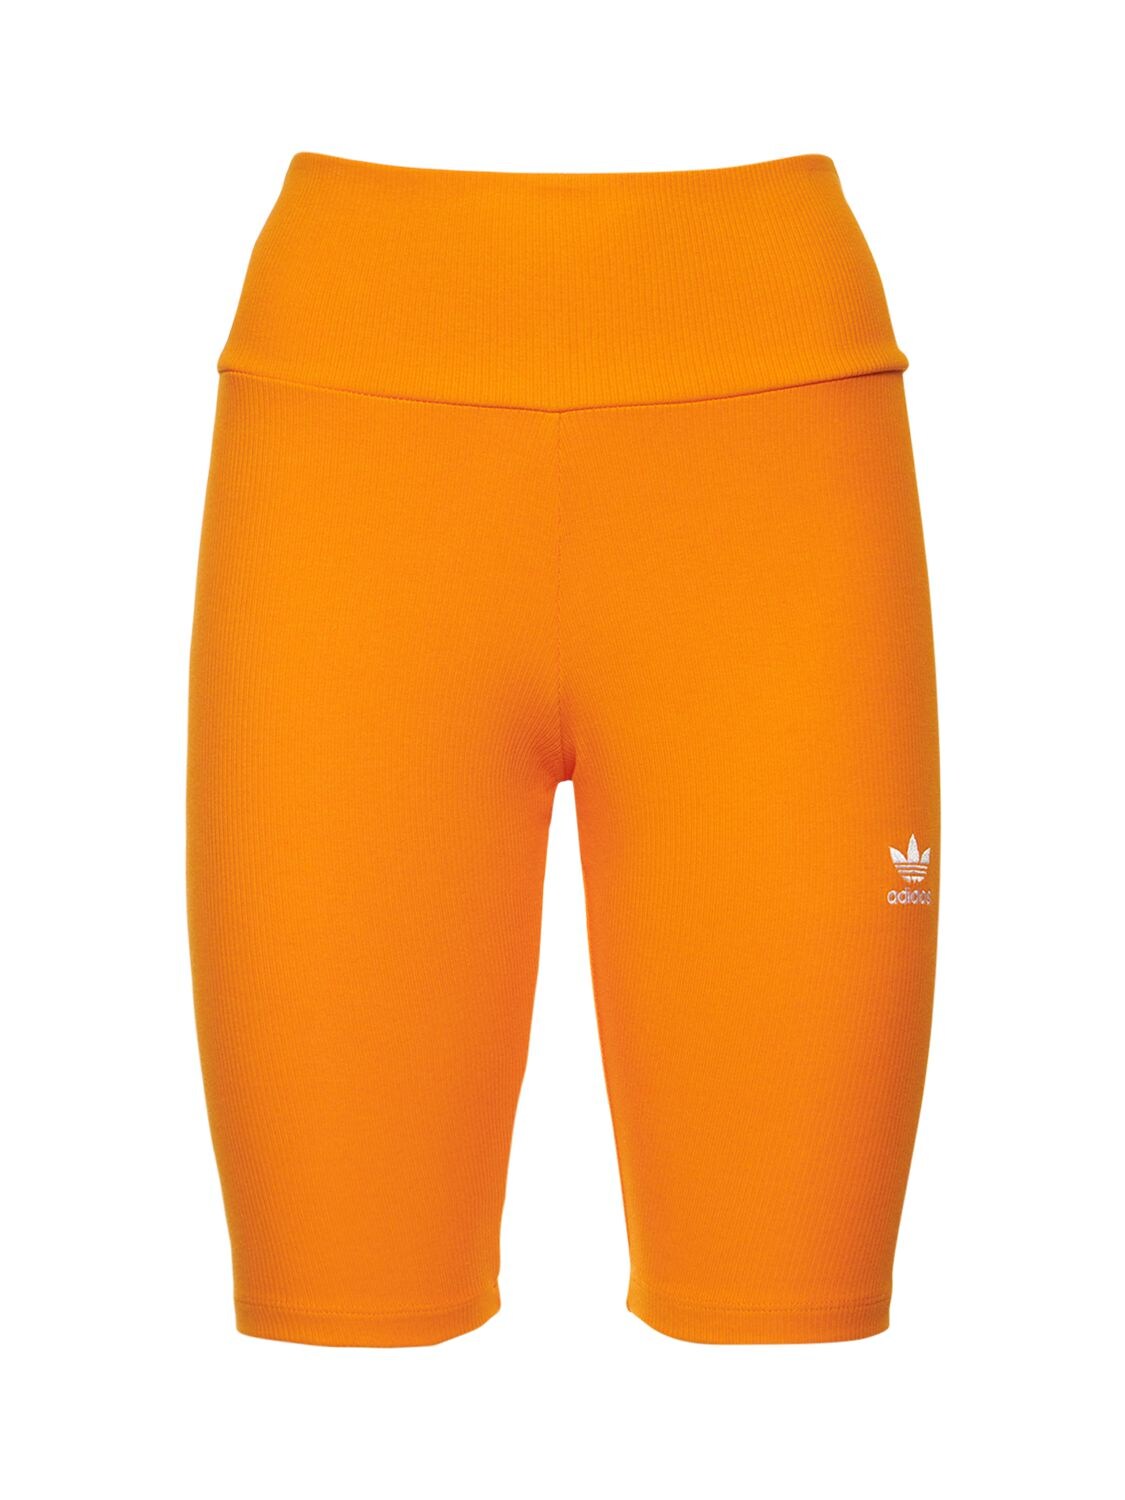 Adidas Originals Ribbed Cotton Blend Shorts In Orange | ModeSens